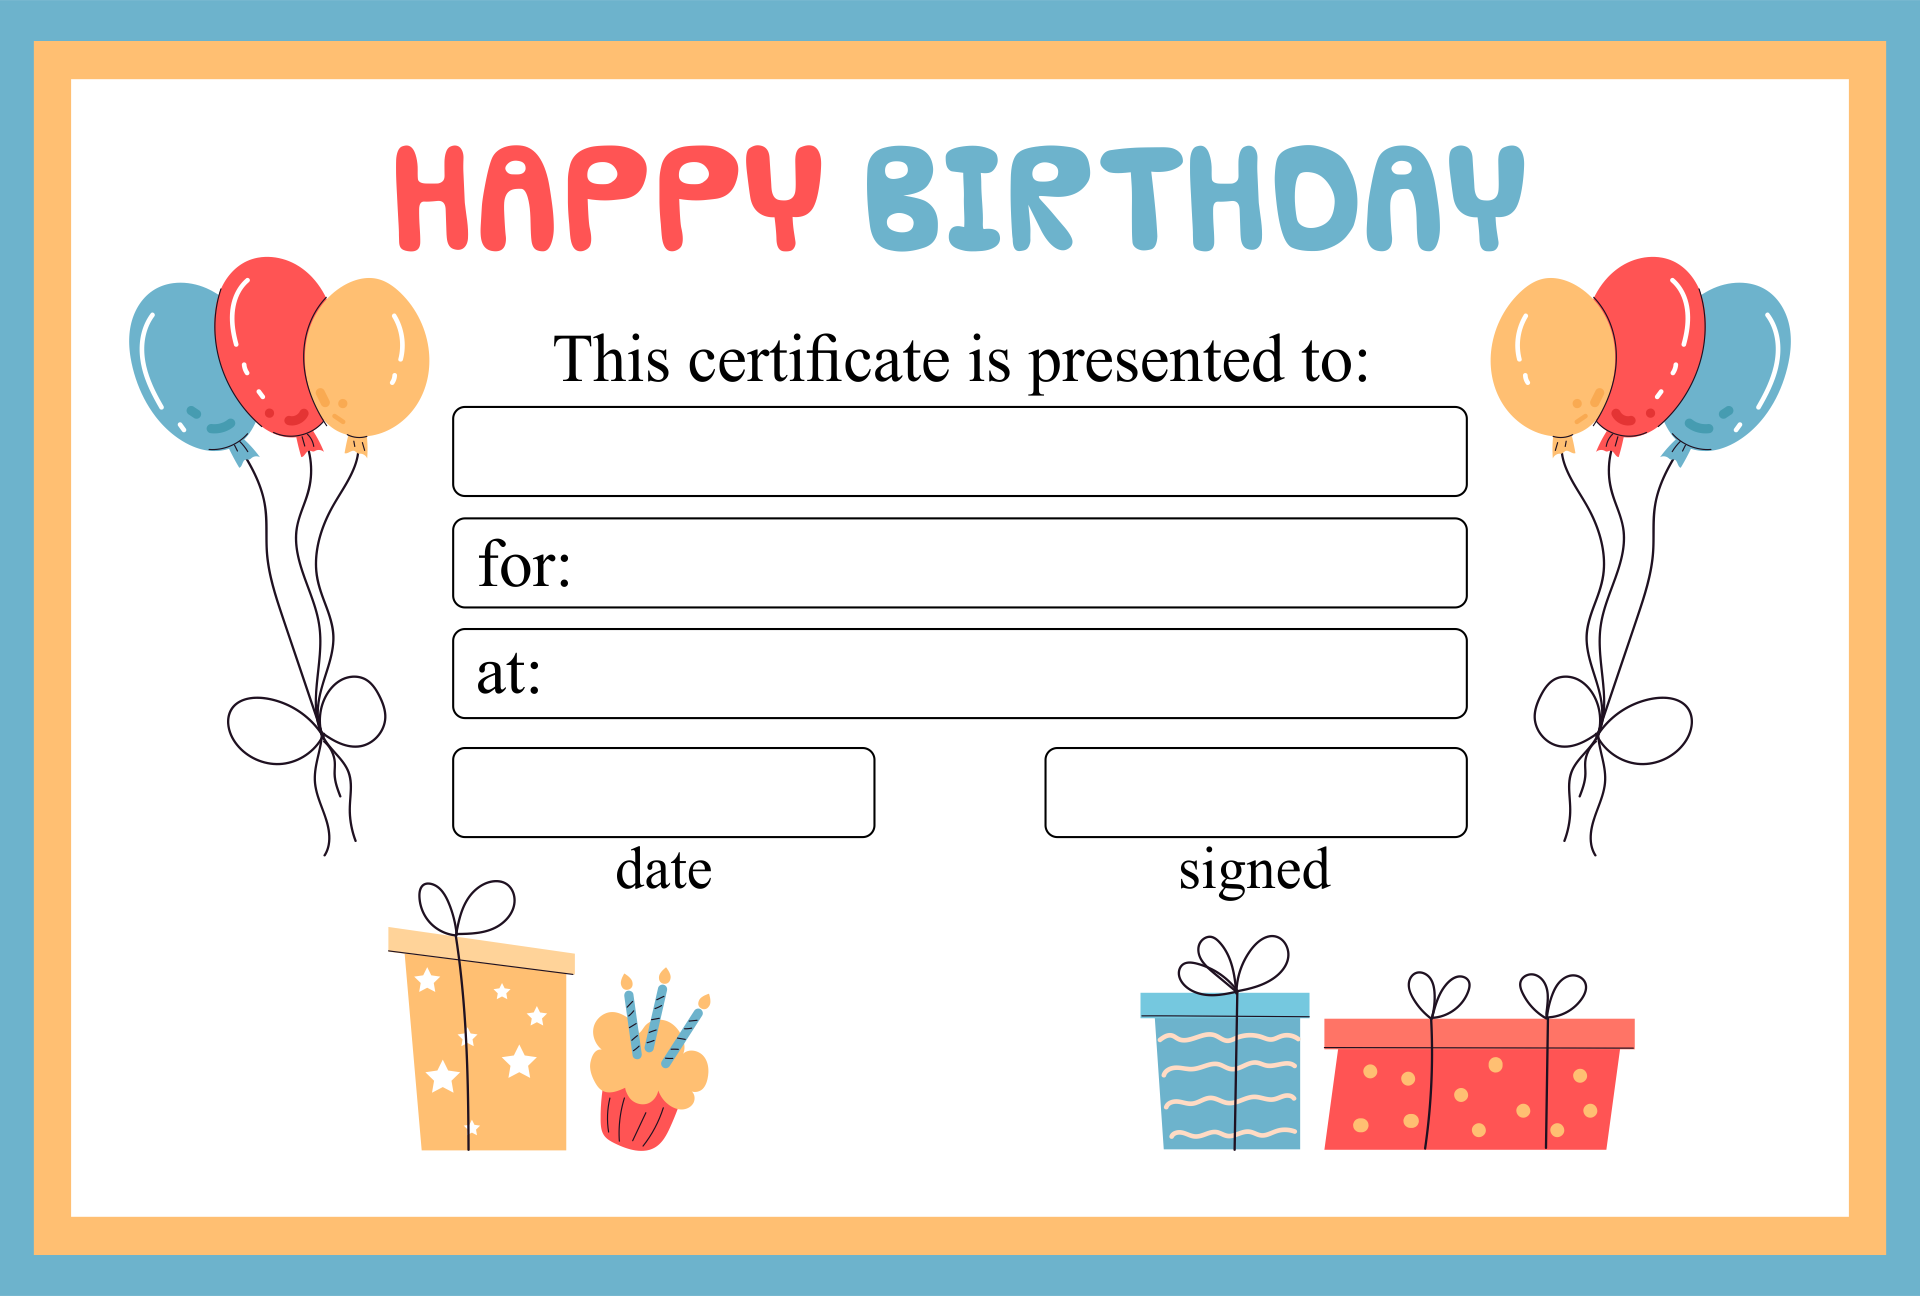 Happy Birthday Gift Certificate